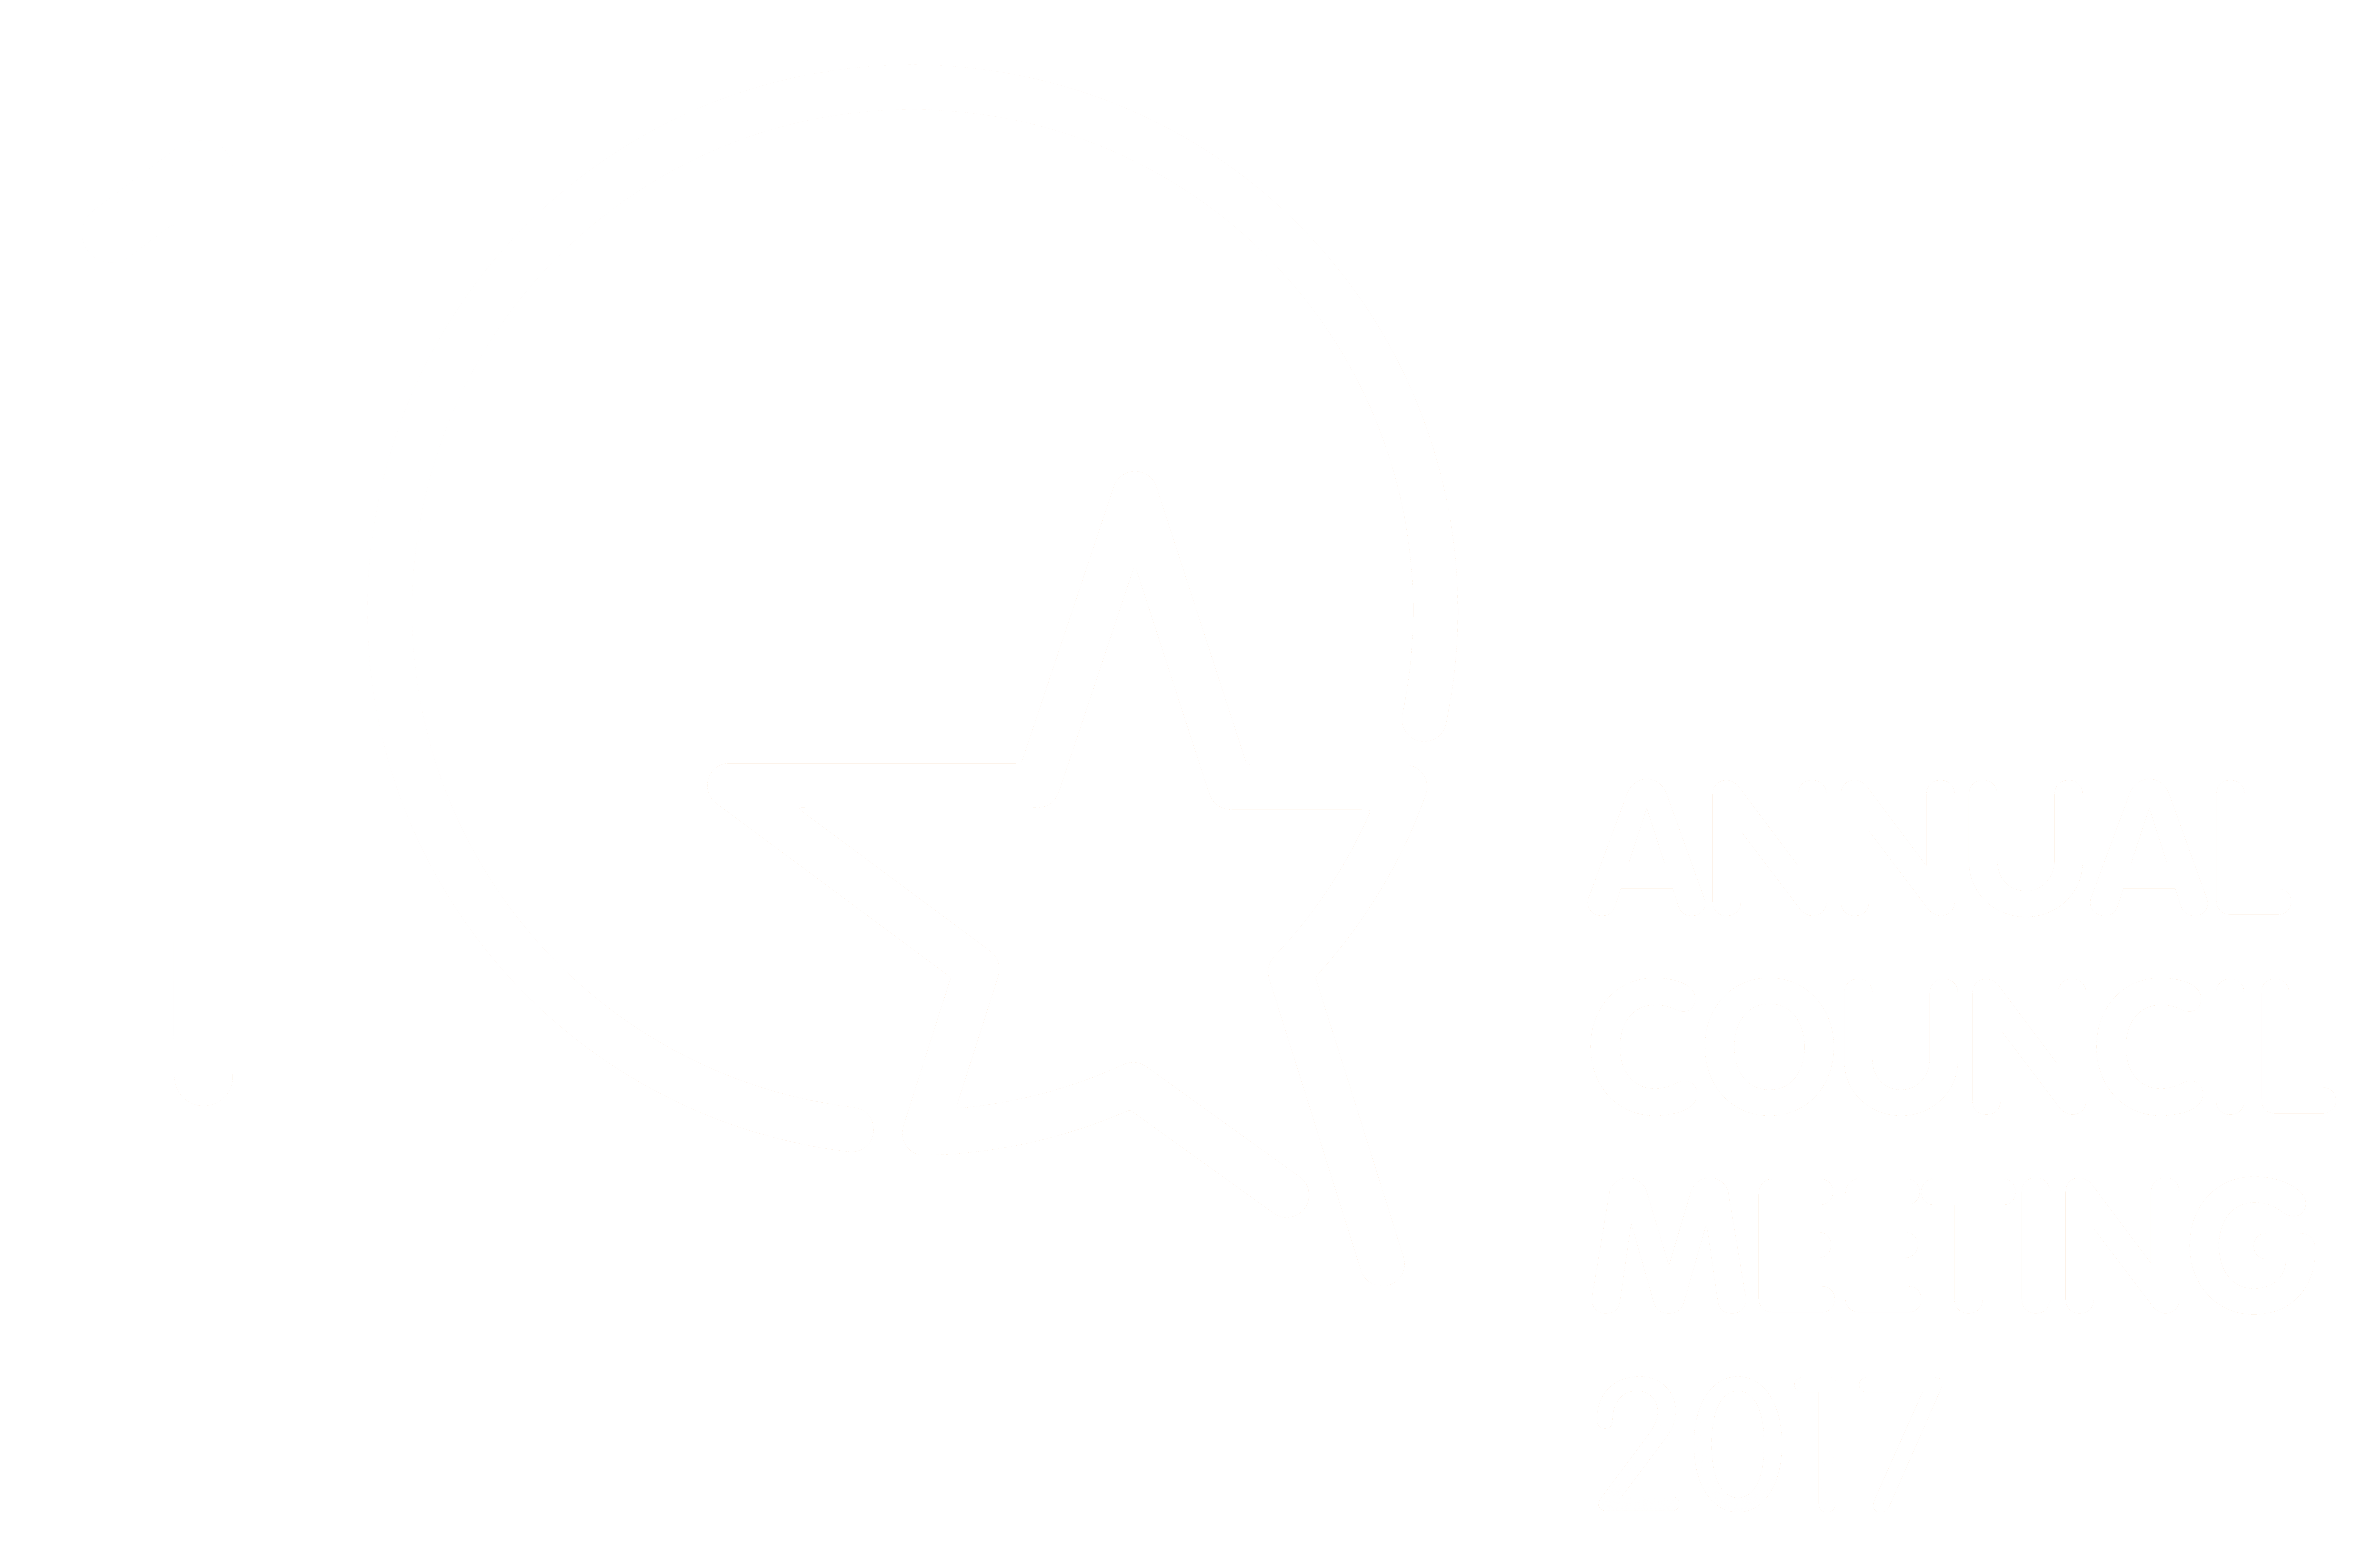 ECFR Annual Council Meeting logo